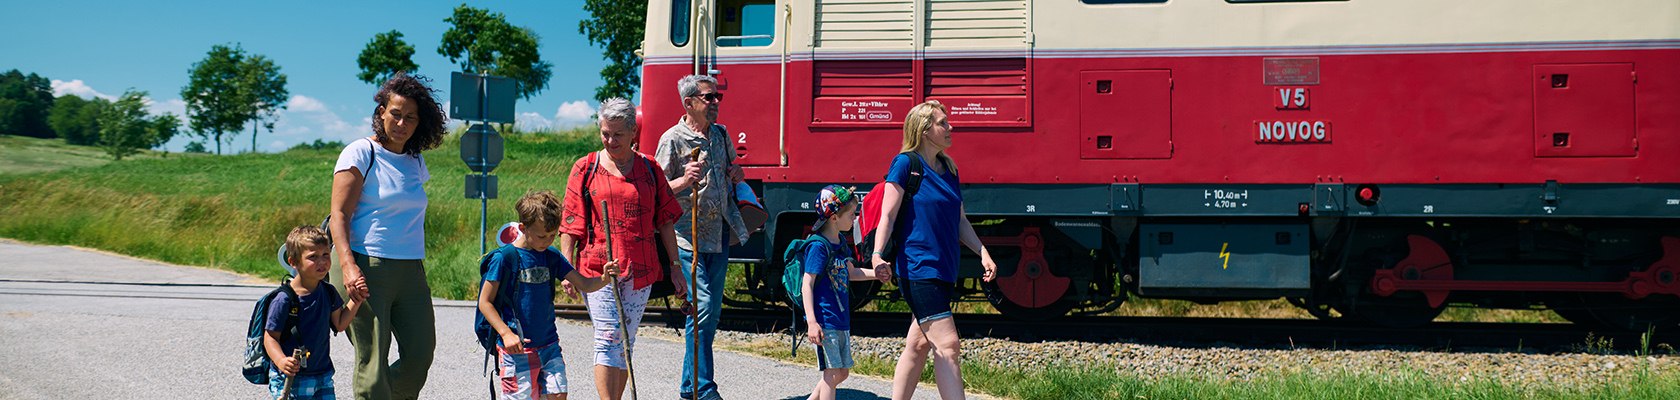 Familie mit Kindern wandert an Zug vorbei